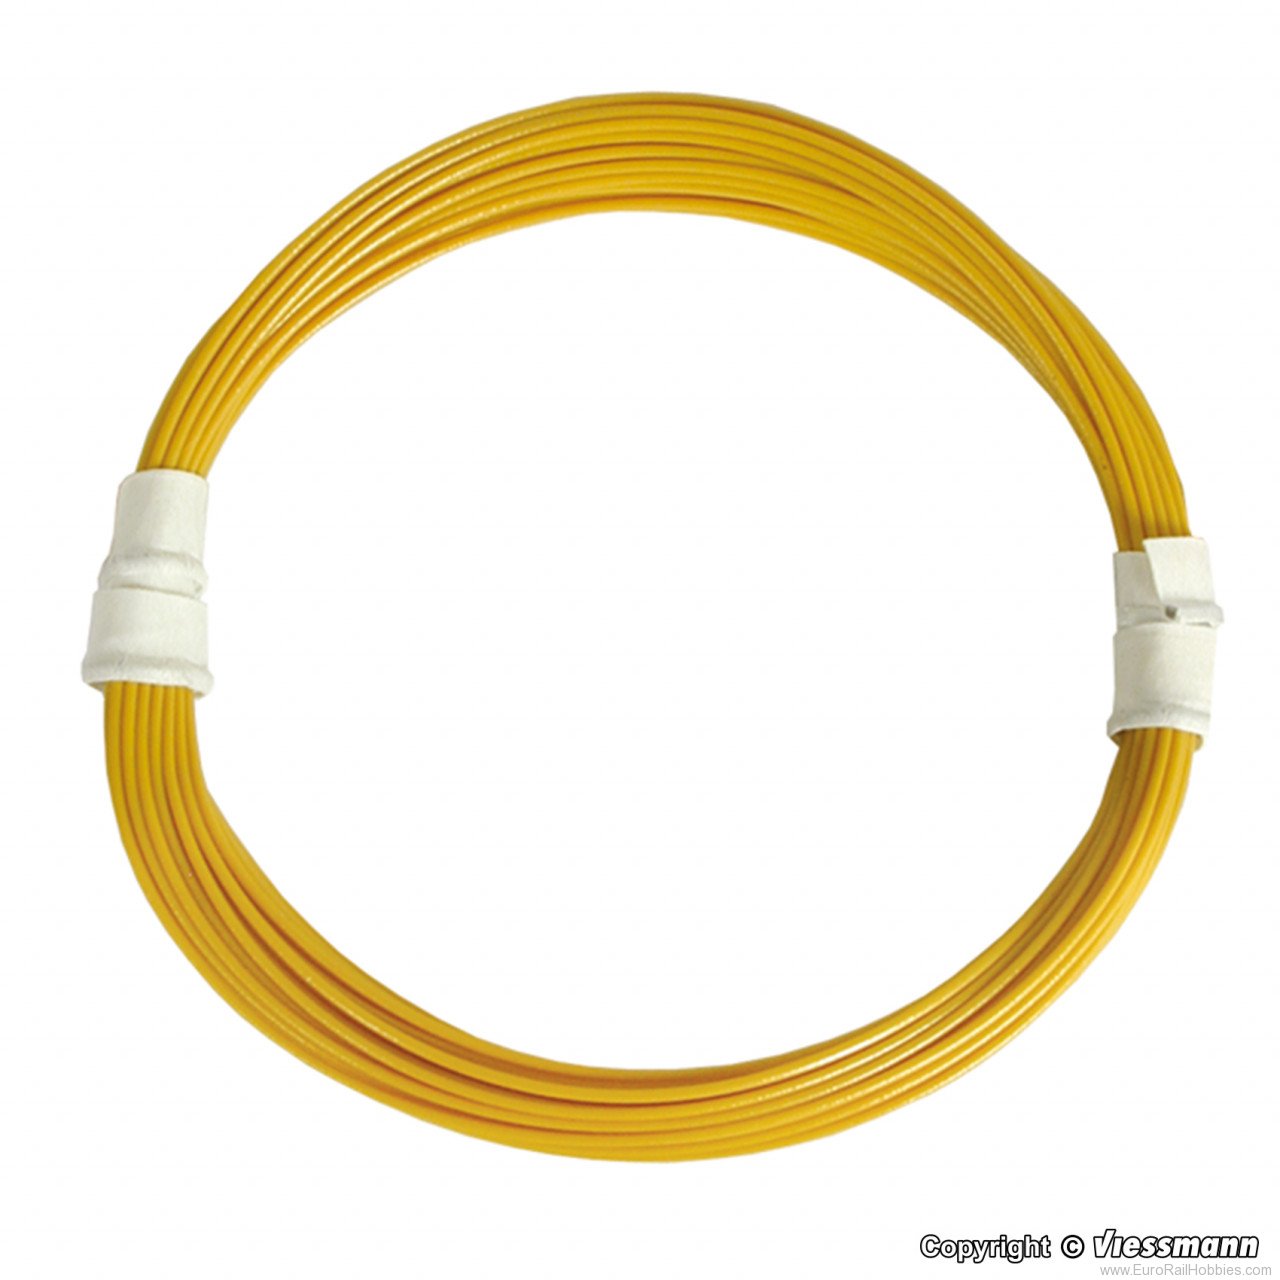 Viessmann 6891 Super thin special wire, 0,03 mm dia., yellow